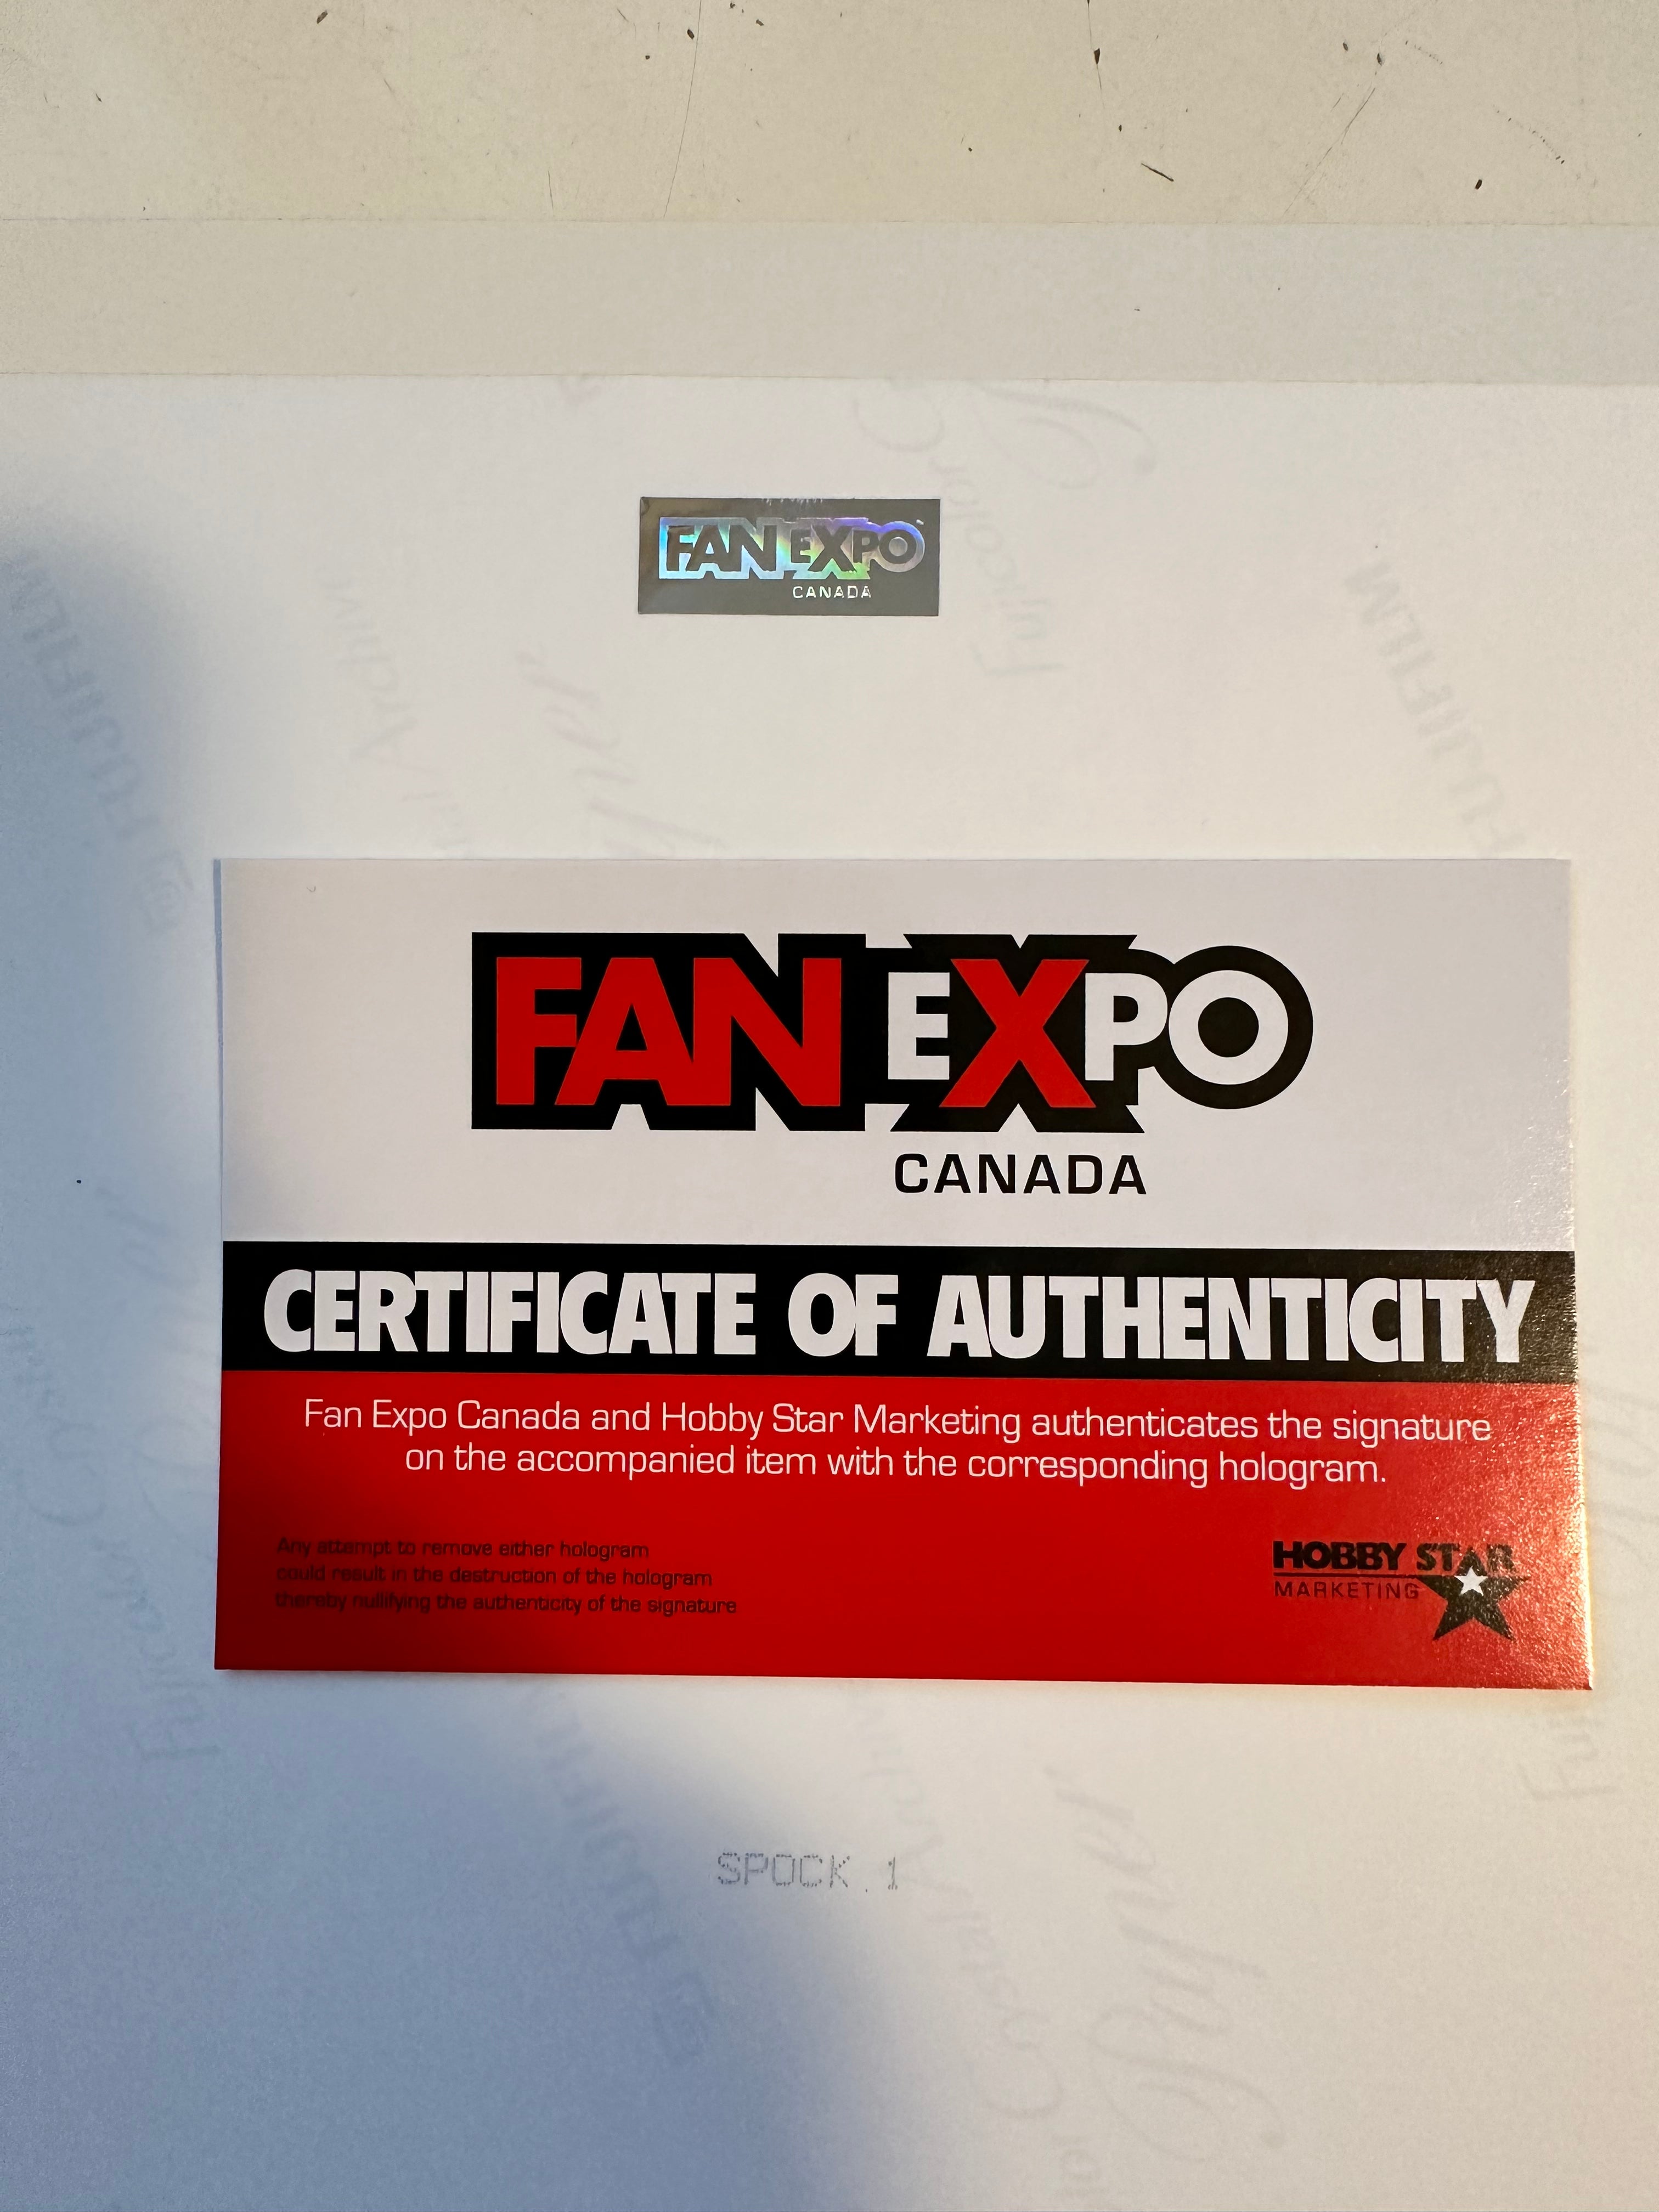 Star Trek Leonard Nimoy( Spock ) rare autograph 8x10 photo certified by Fanexpo